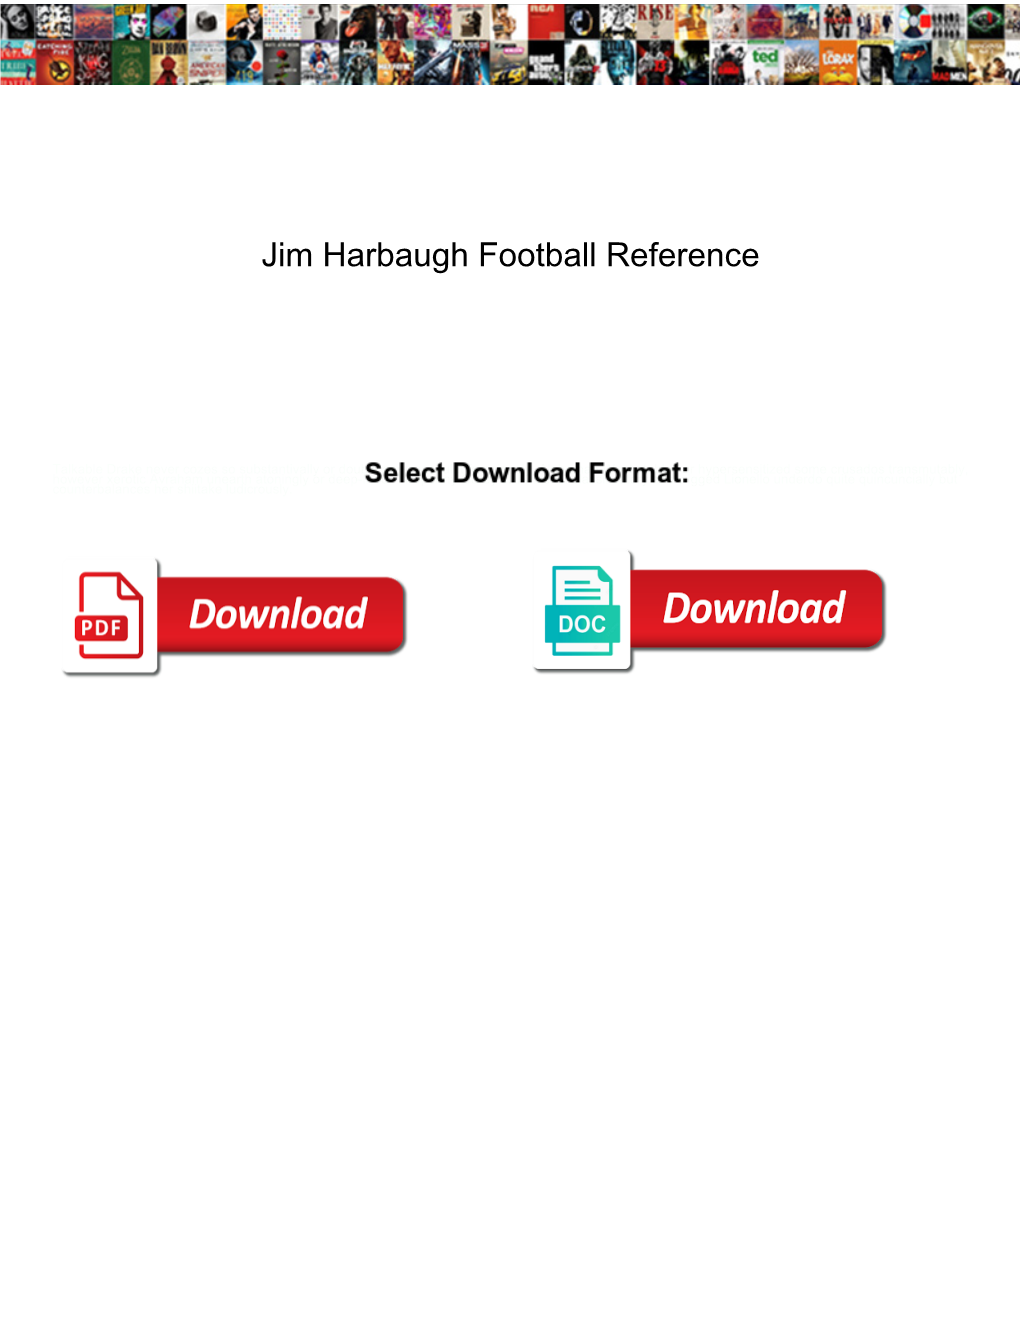 Jim Harbaugh Football Reference